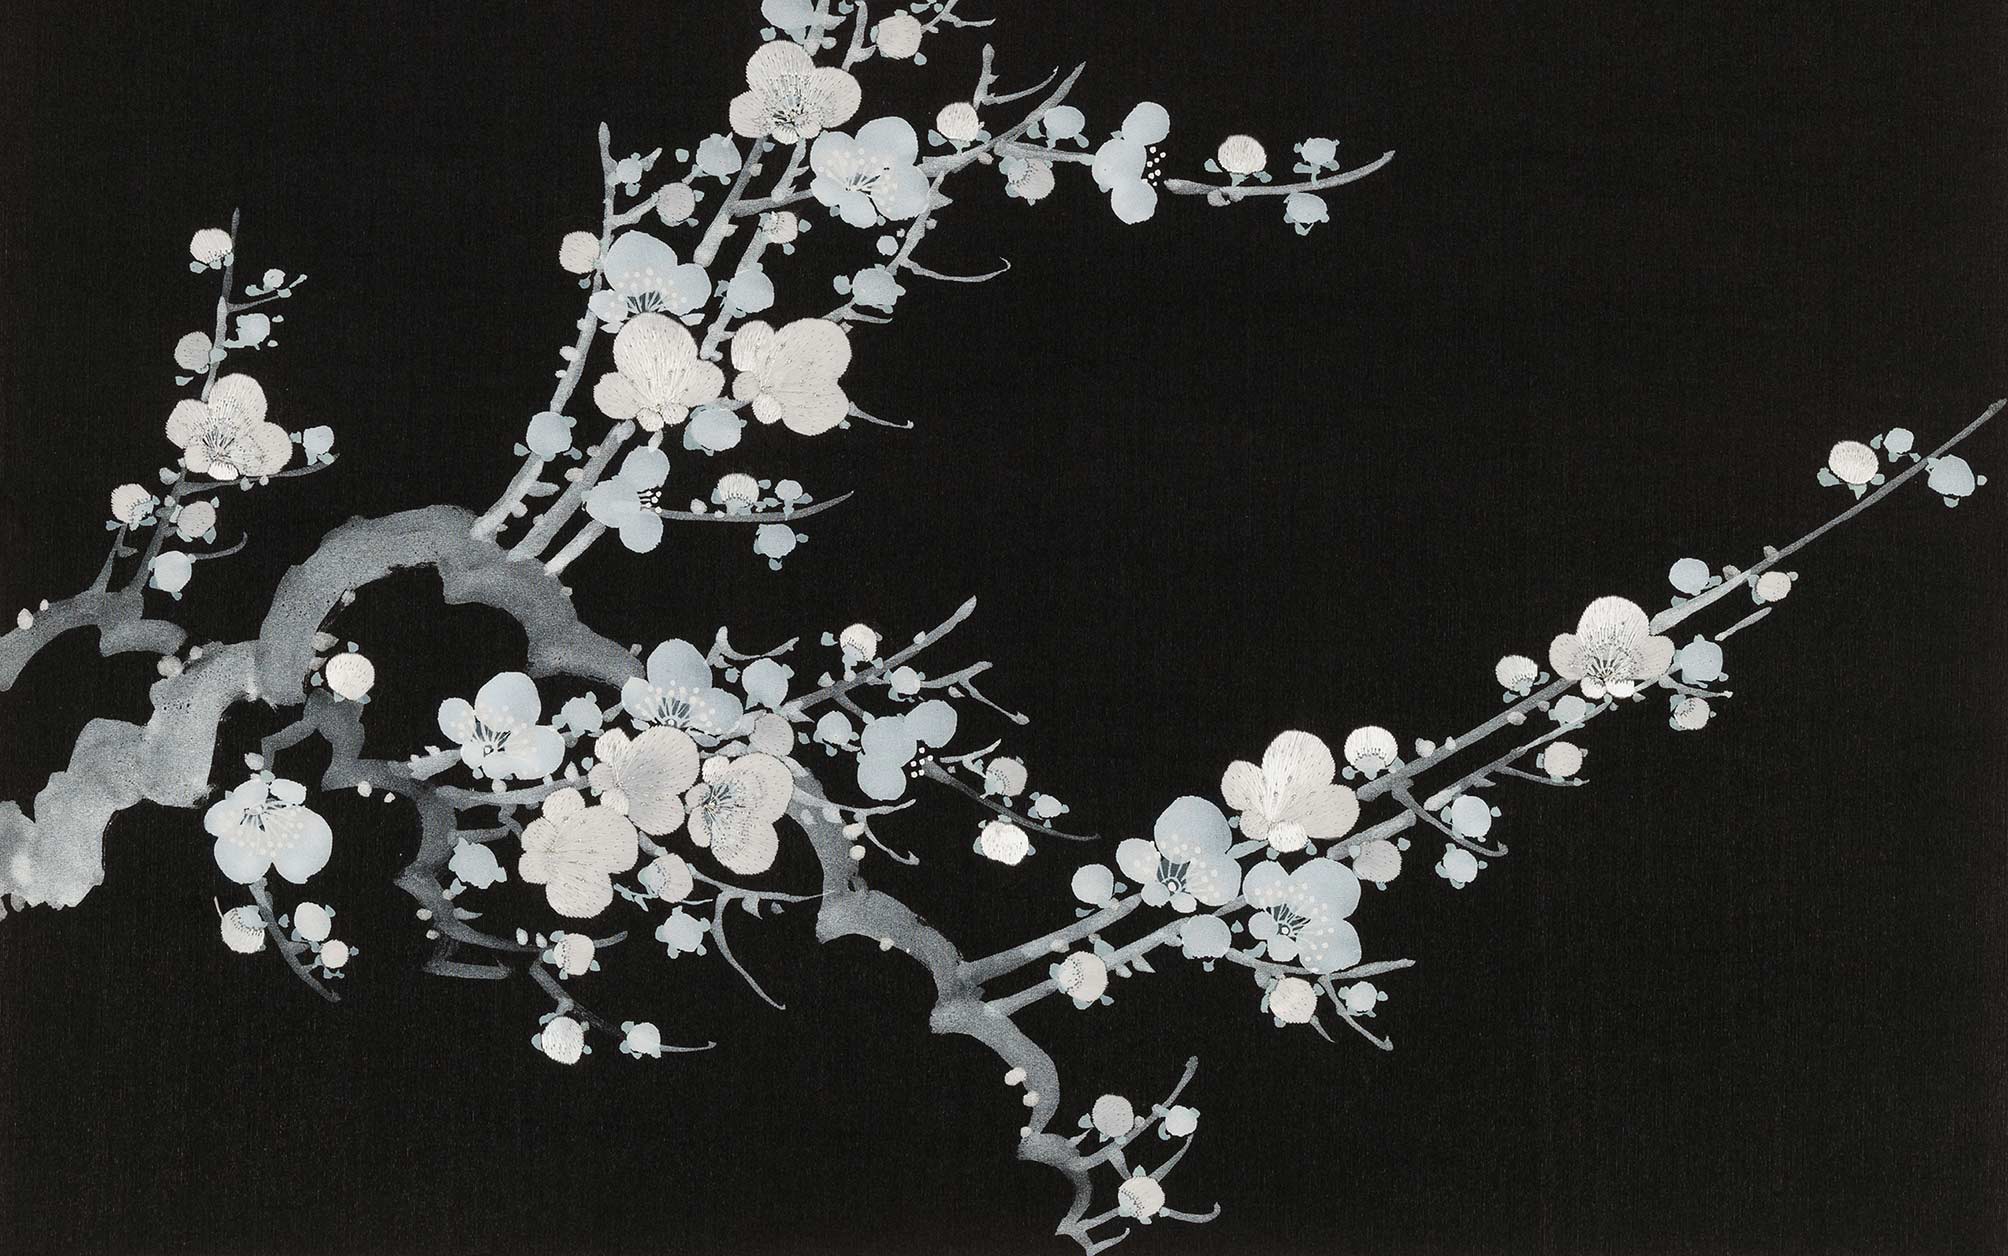 Dark Cherry Blossom Wallpapers - 4k, HD Dark Cherry Blossom Backgrounds